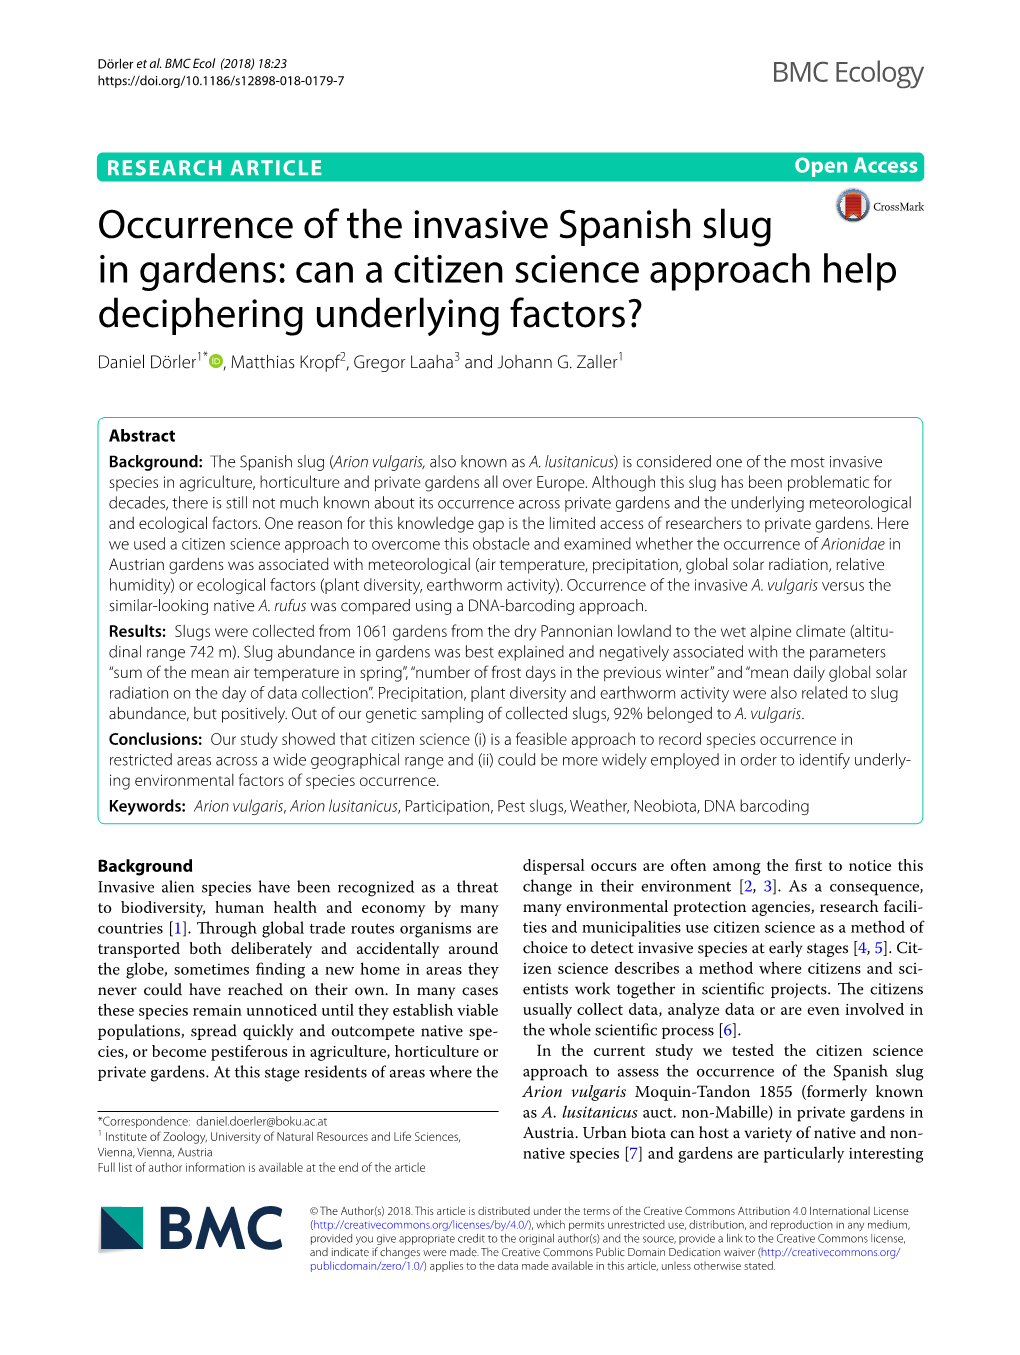 Occurrence of the Invasive Spanish Slug in Gardens